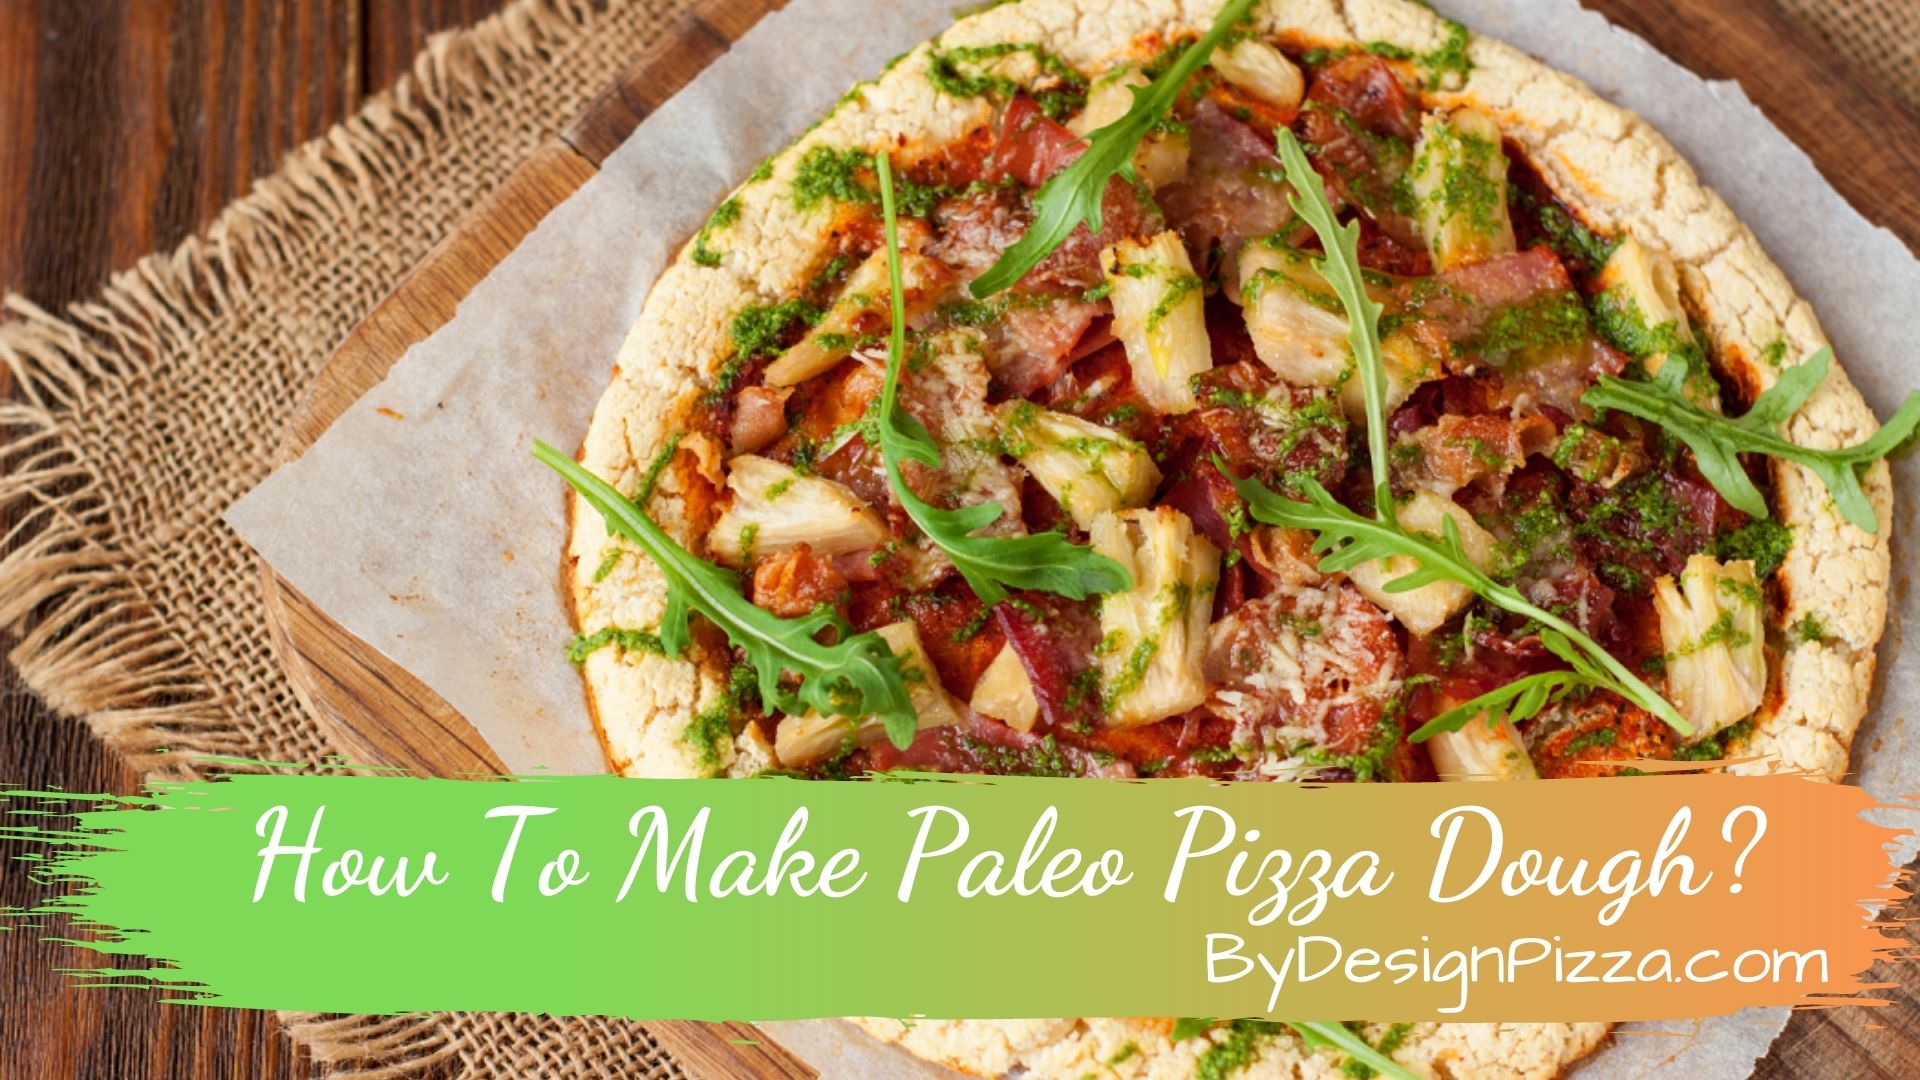 How To Make Paleo Pizza Dough